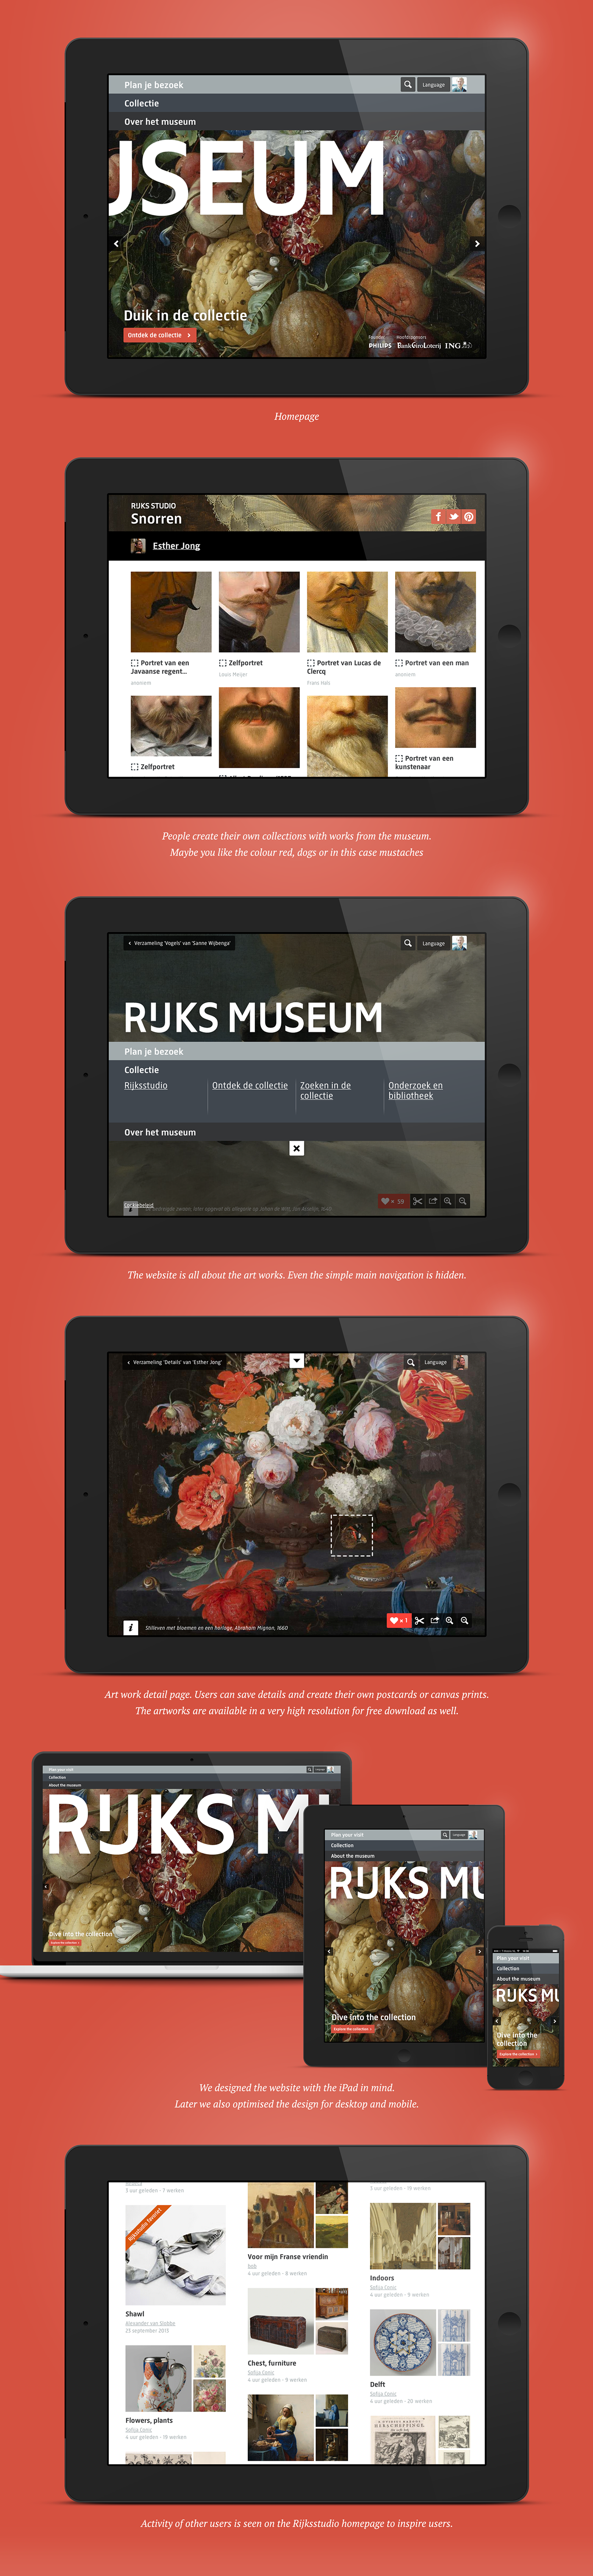 museum Rijksmuseum amsterdam Website navigation simplicity gallery Collection artworks Exhibition  flat design flat social minimal